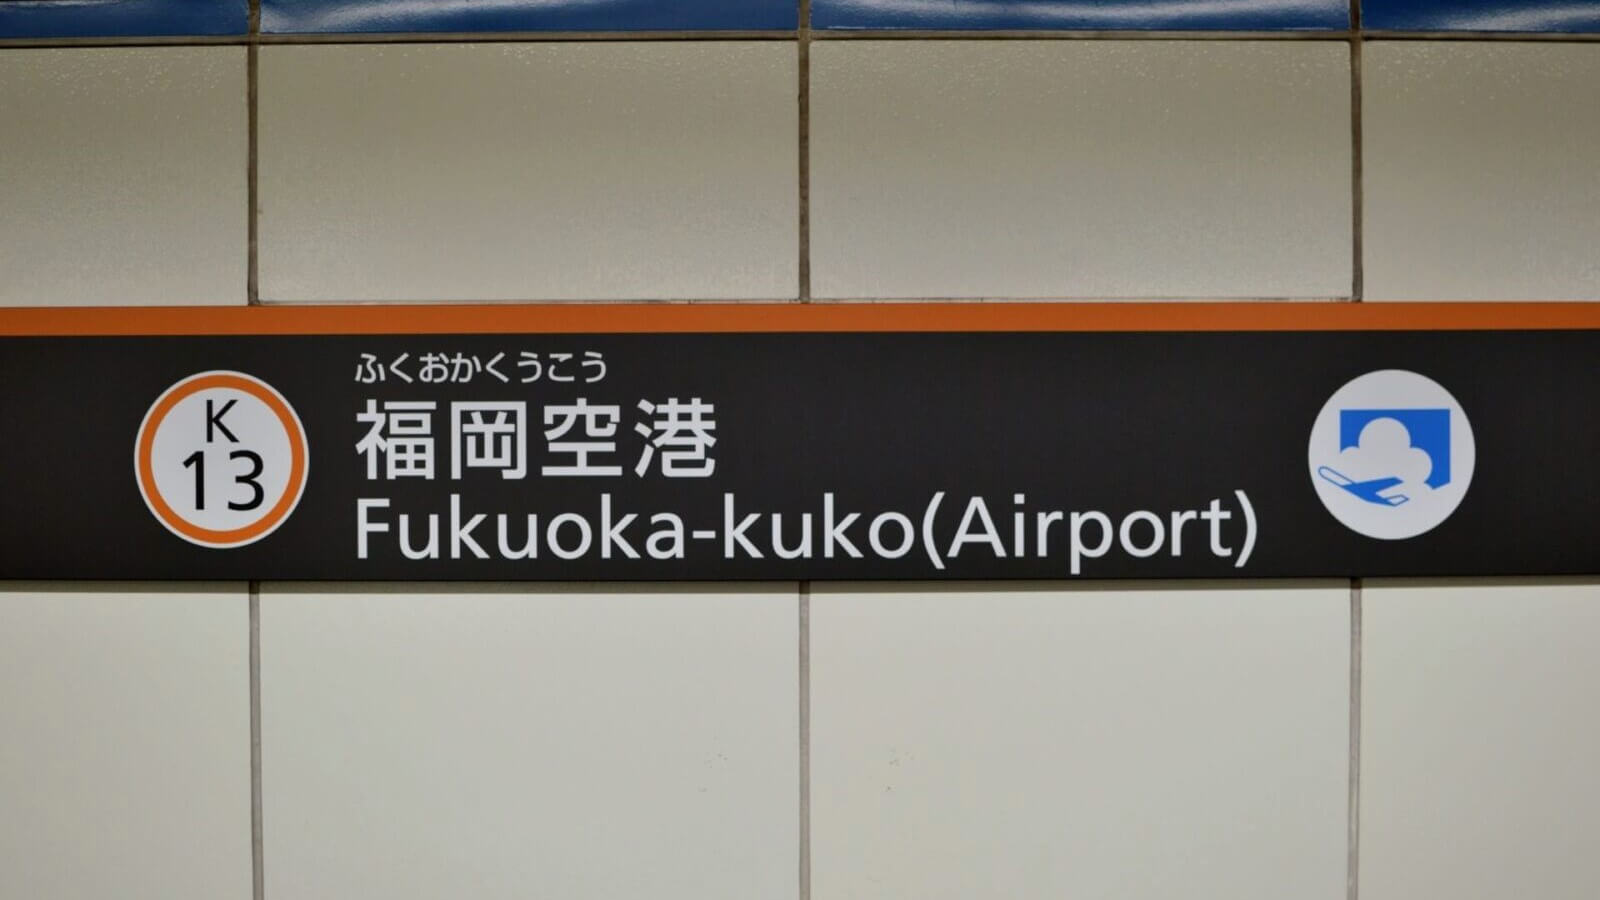 kyushu-fukuoka-airport-banner-edit